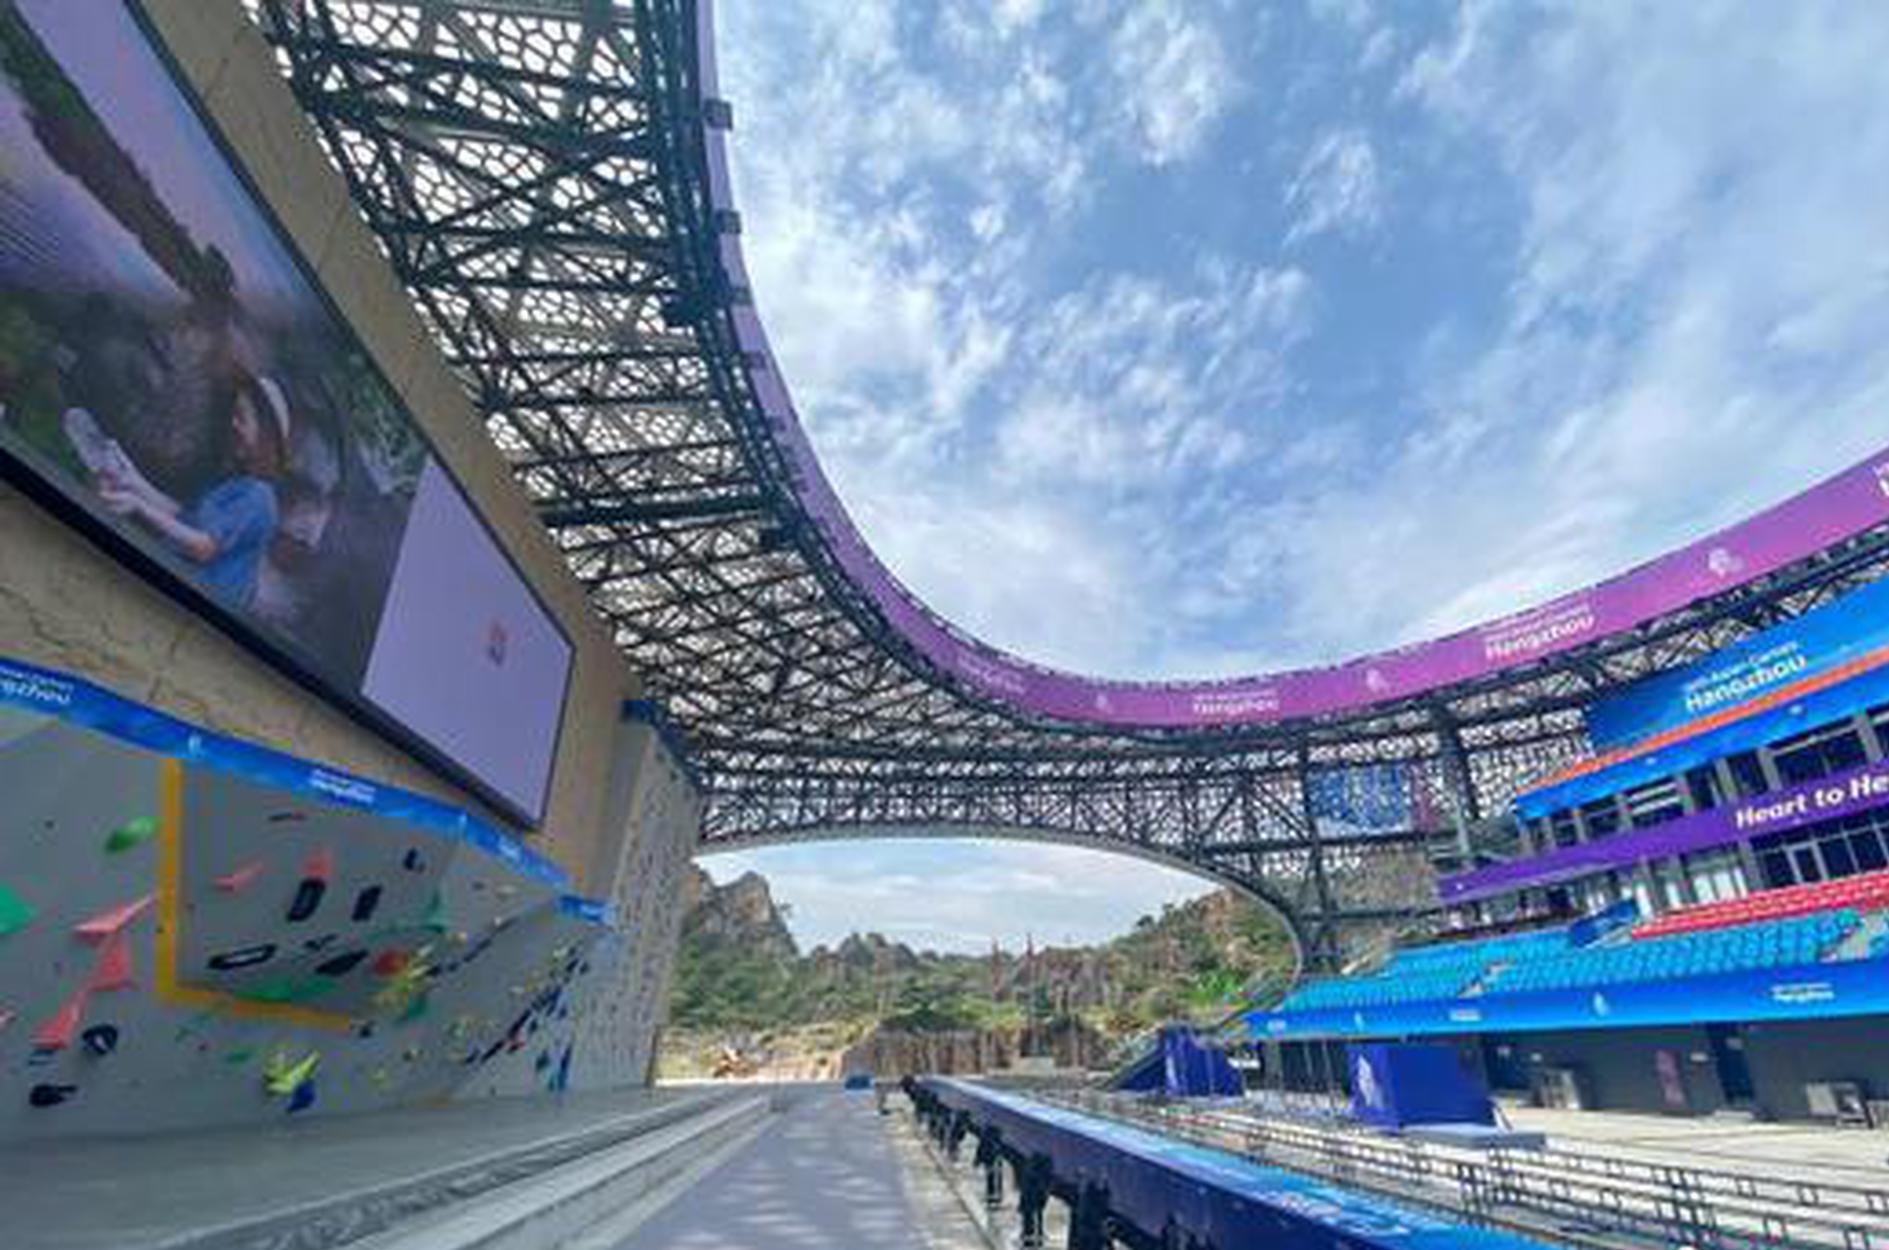 19th Asian Games climbing center nurtures green development